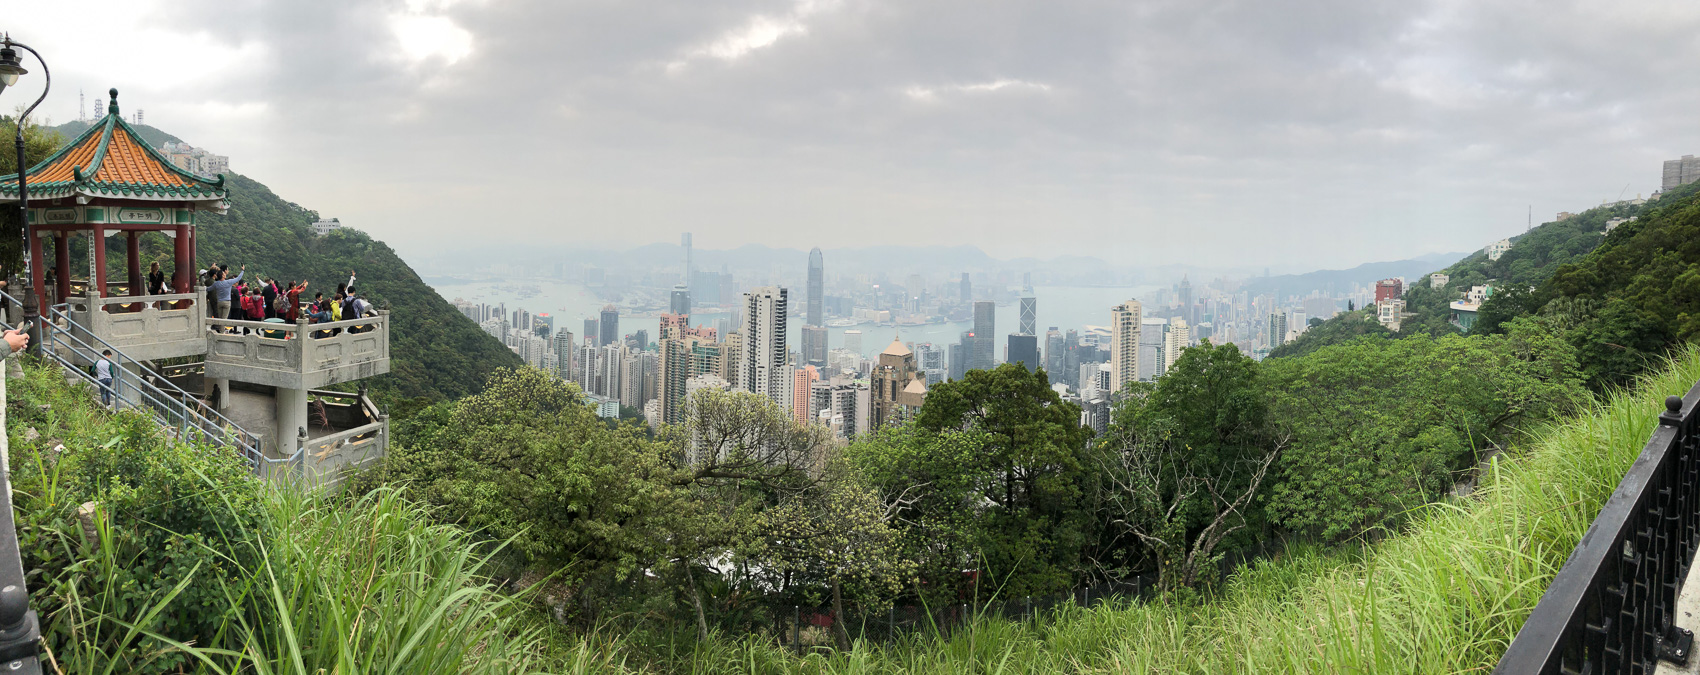 Hong Kong - Victoria Peak Day